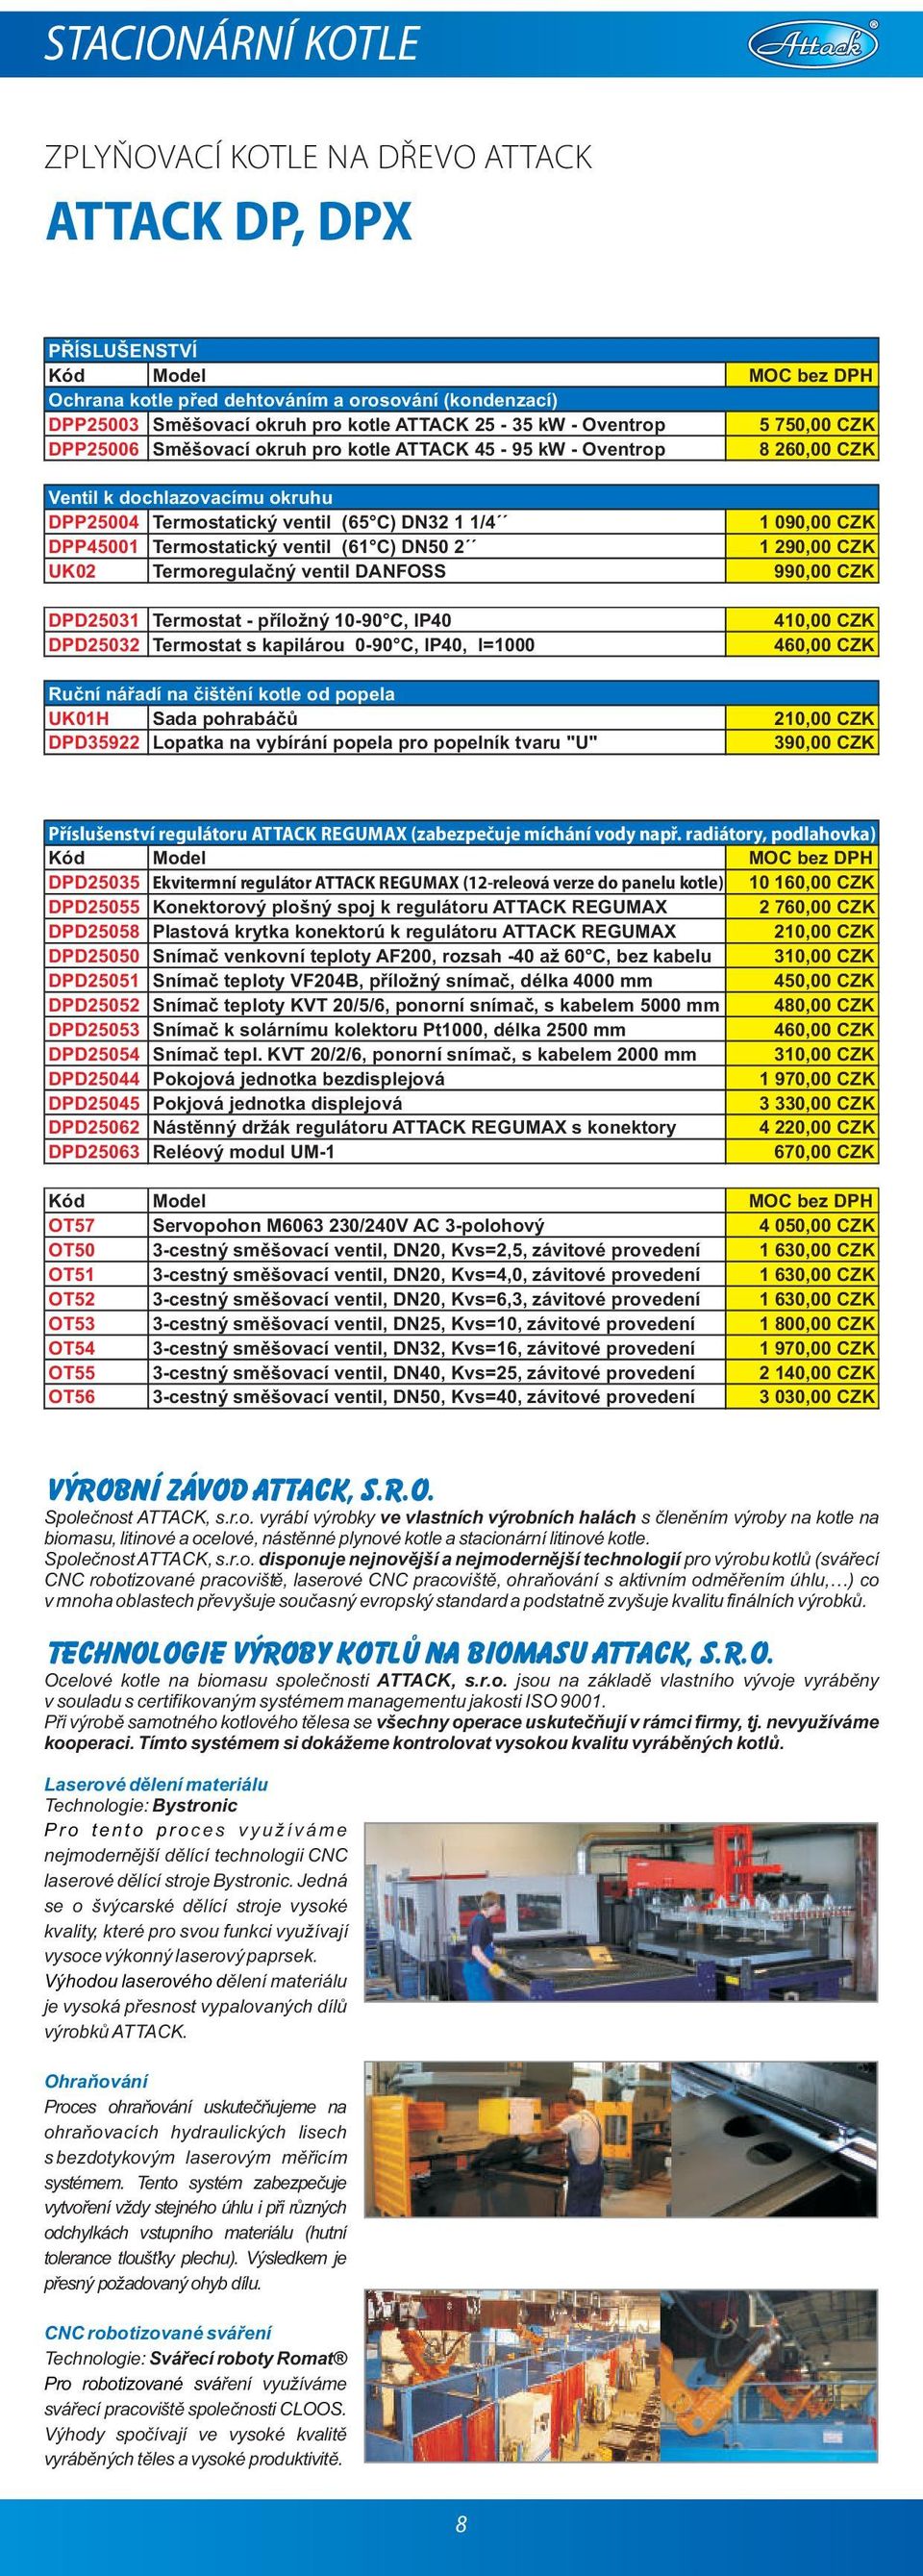 DPP45001 Termostatický ventil (61 C) DN50 2 1 290,00 CZK UK02 Termoregulačný ventil DANFOSS 990,00 CZK DPD25031 Termostat - příložný 10-90 C, IP40 DPD25032 Termostat s kapilárou 0-90 C, IP40, l=1000